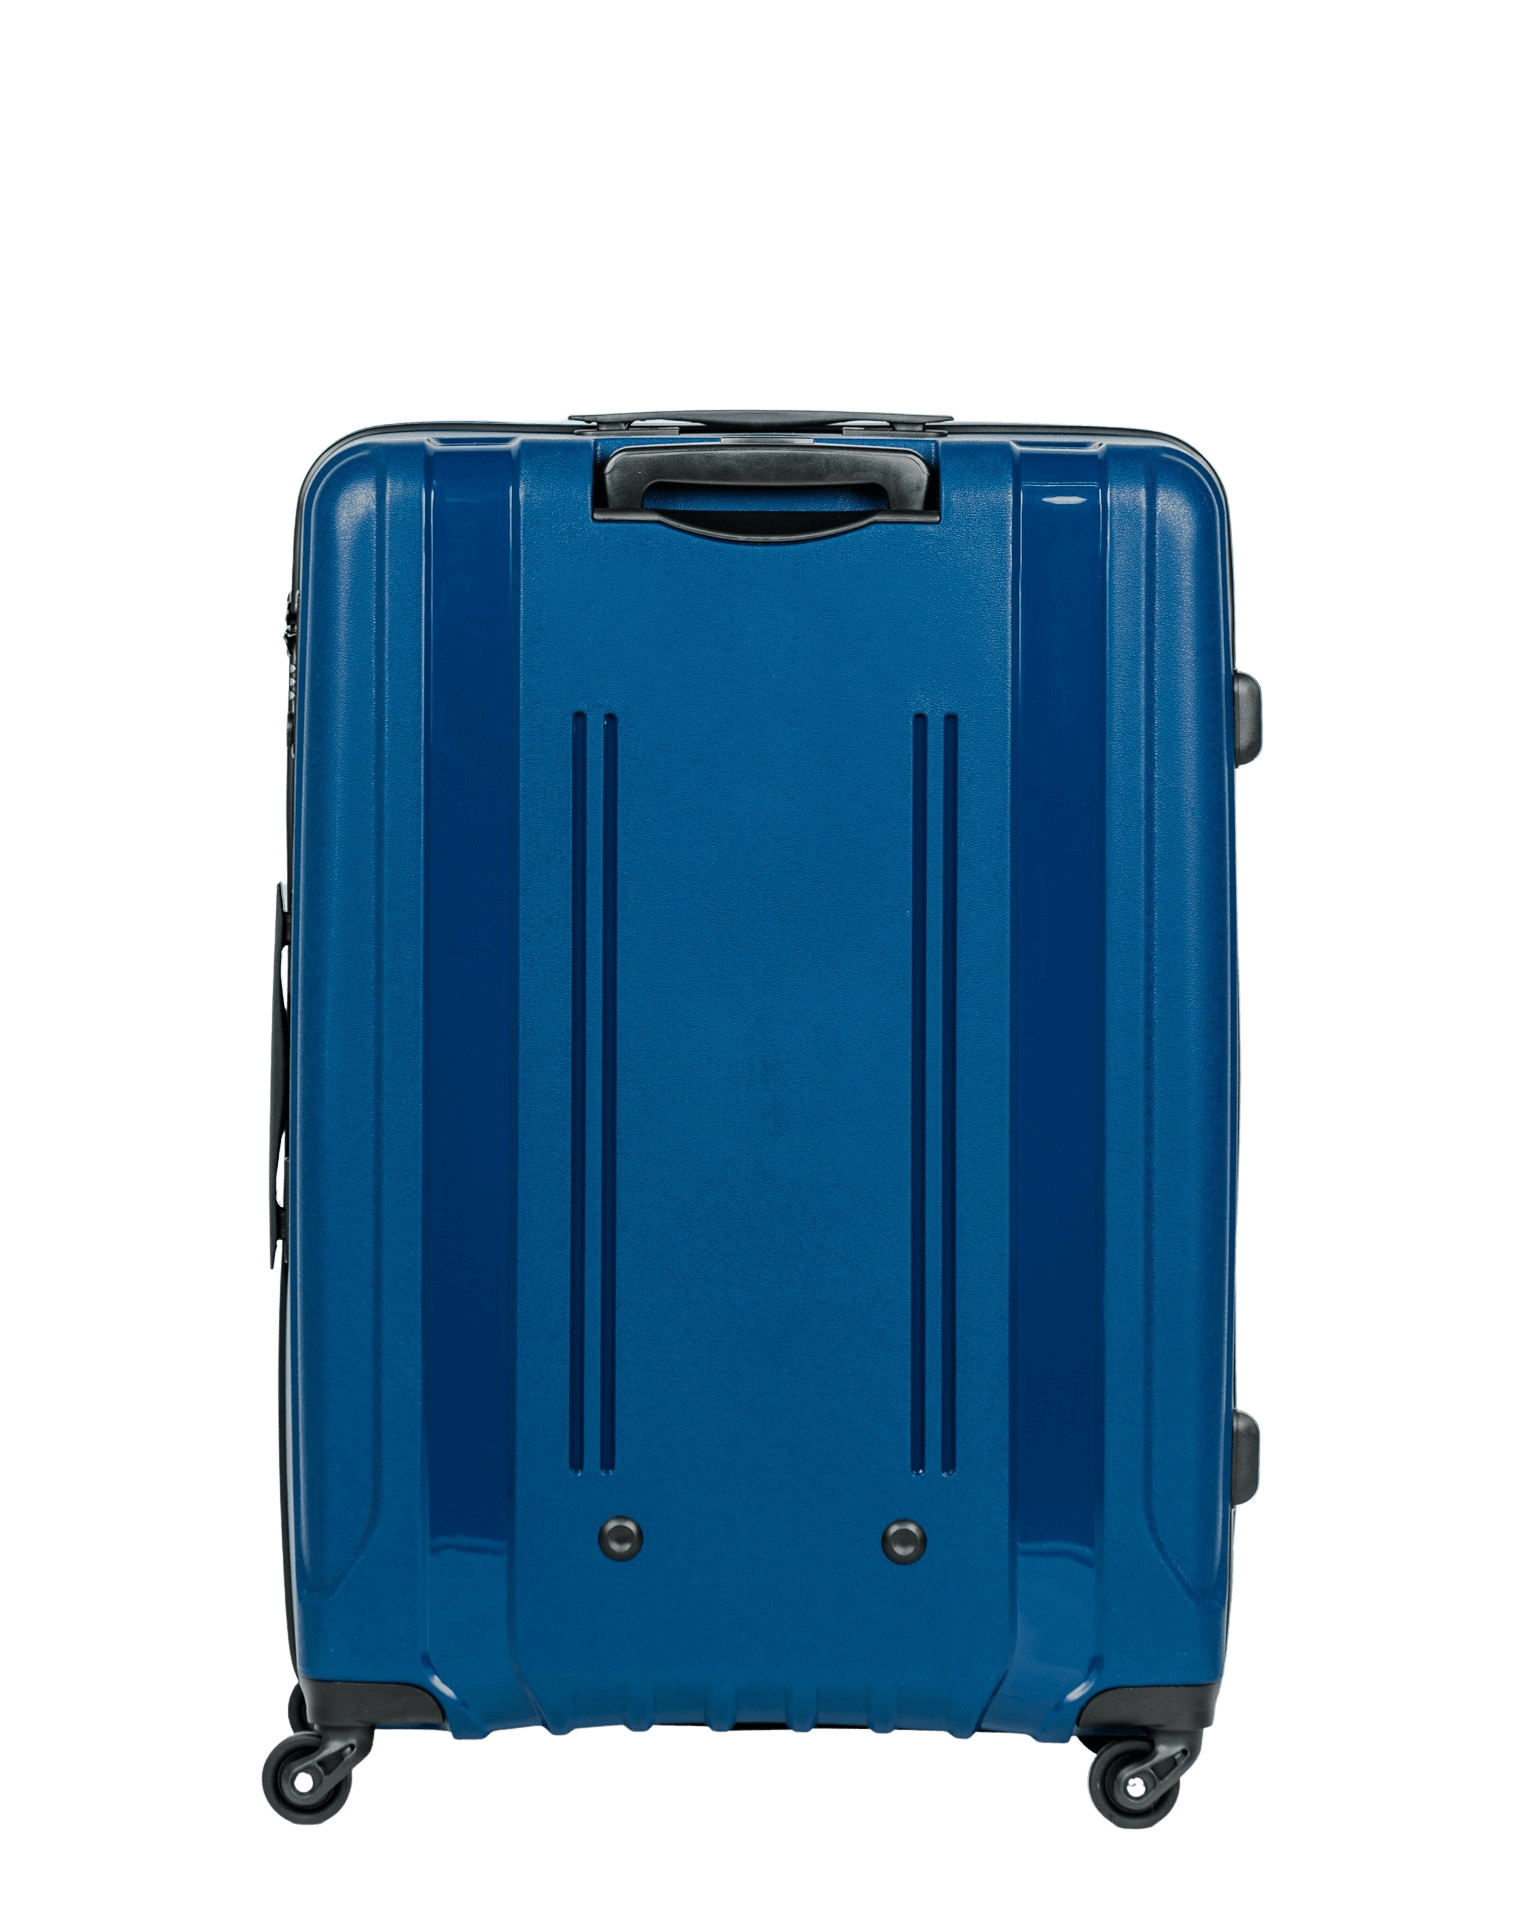 Tourist - Grösse L 75cm - Swissbags: Travel Bags, Luggage, Accessories -  Vouvry, Switzerland - Travel Bags, Luggage, Accessories - Vouvry,  Switzerland